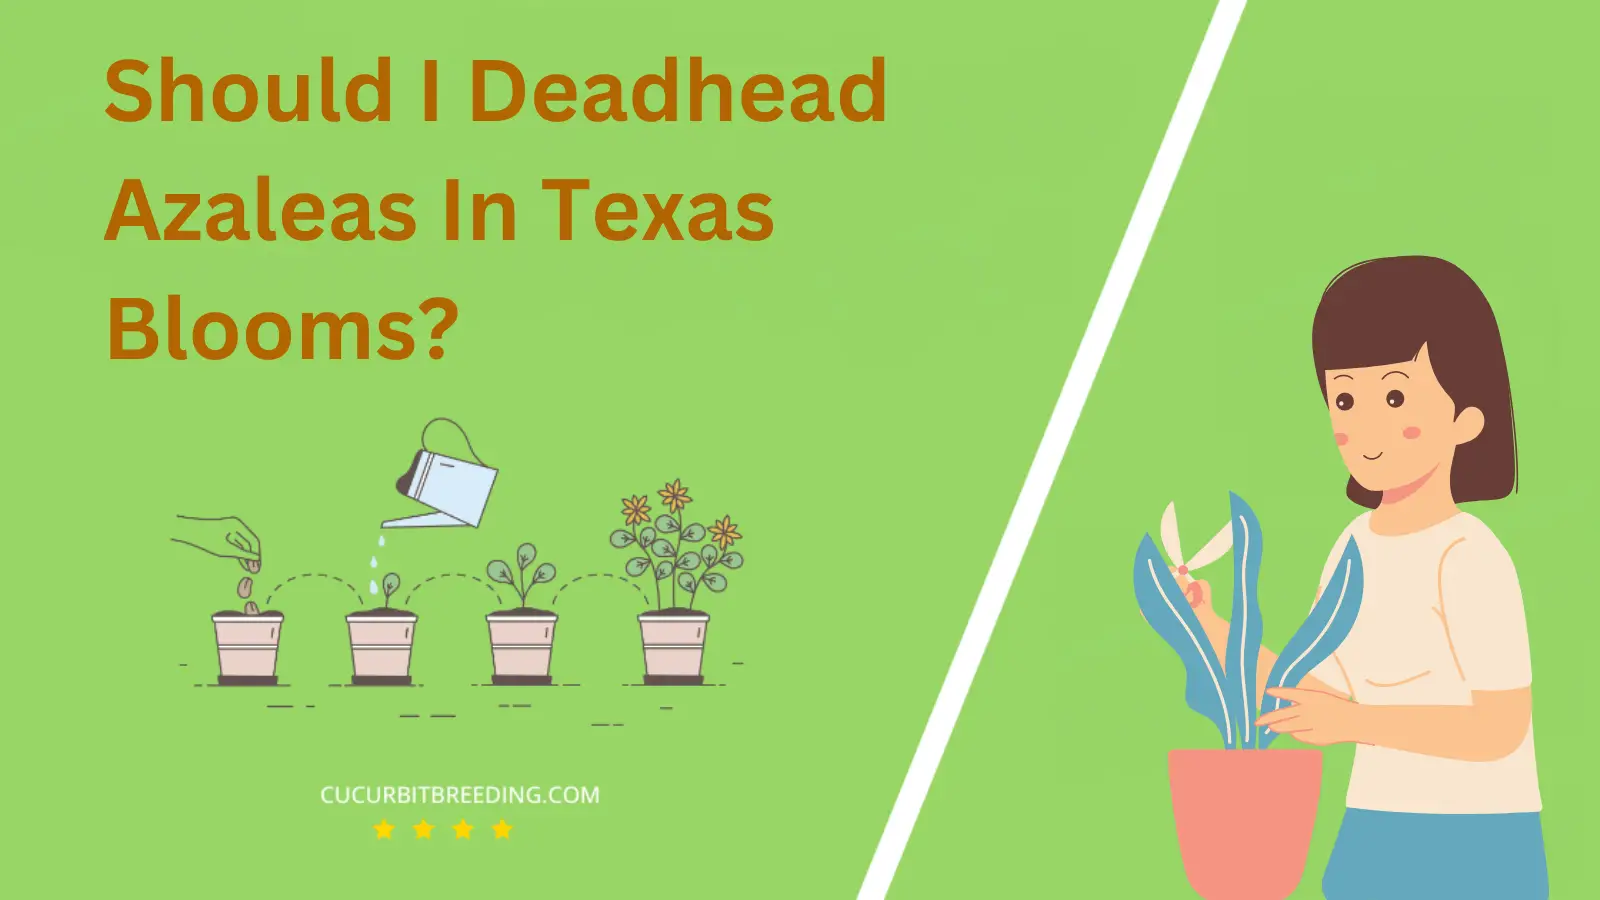 Should I Deadhead Azaleas In Texas Blooms?